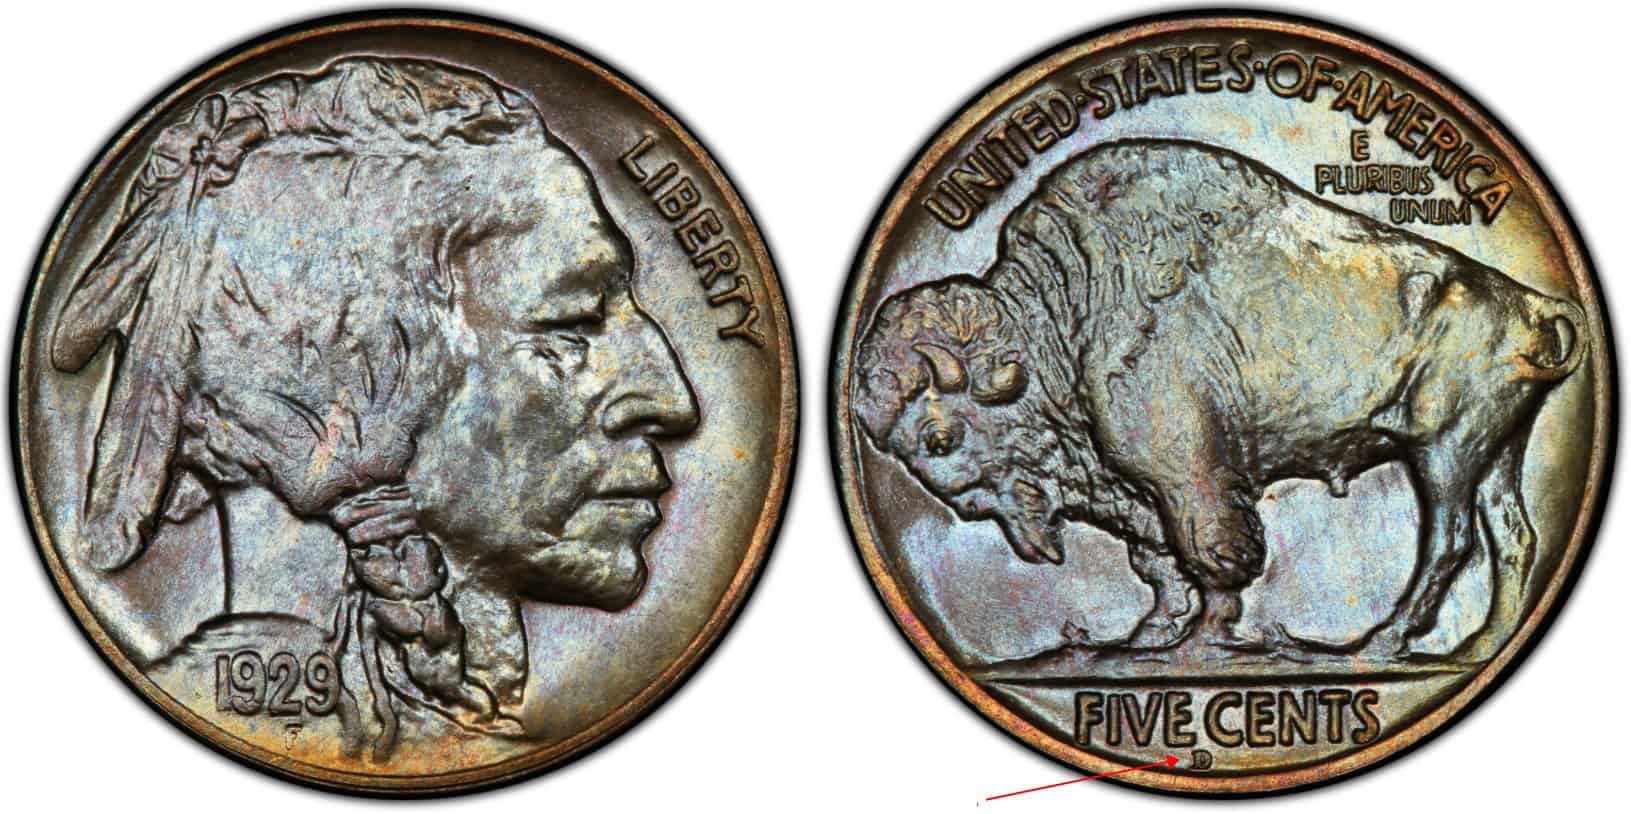 1929 D Buffalo nickel